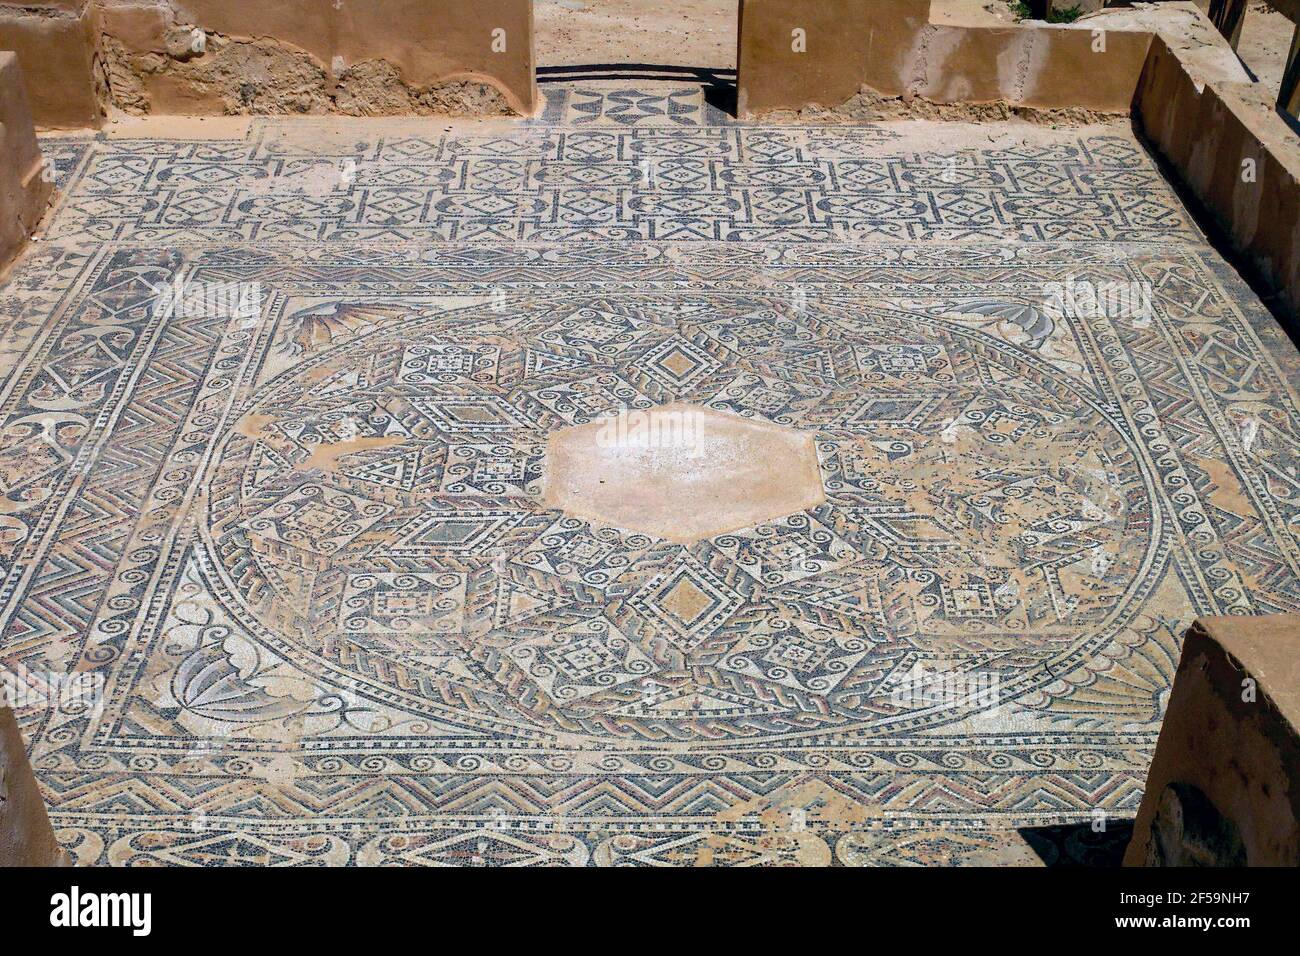 mosaic floor, baths of Oceanus, Roman ruins of Sabratha, Libya Stock Photo